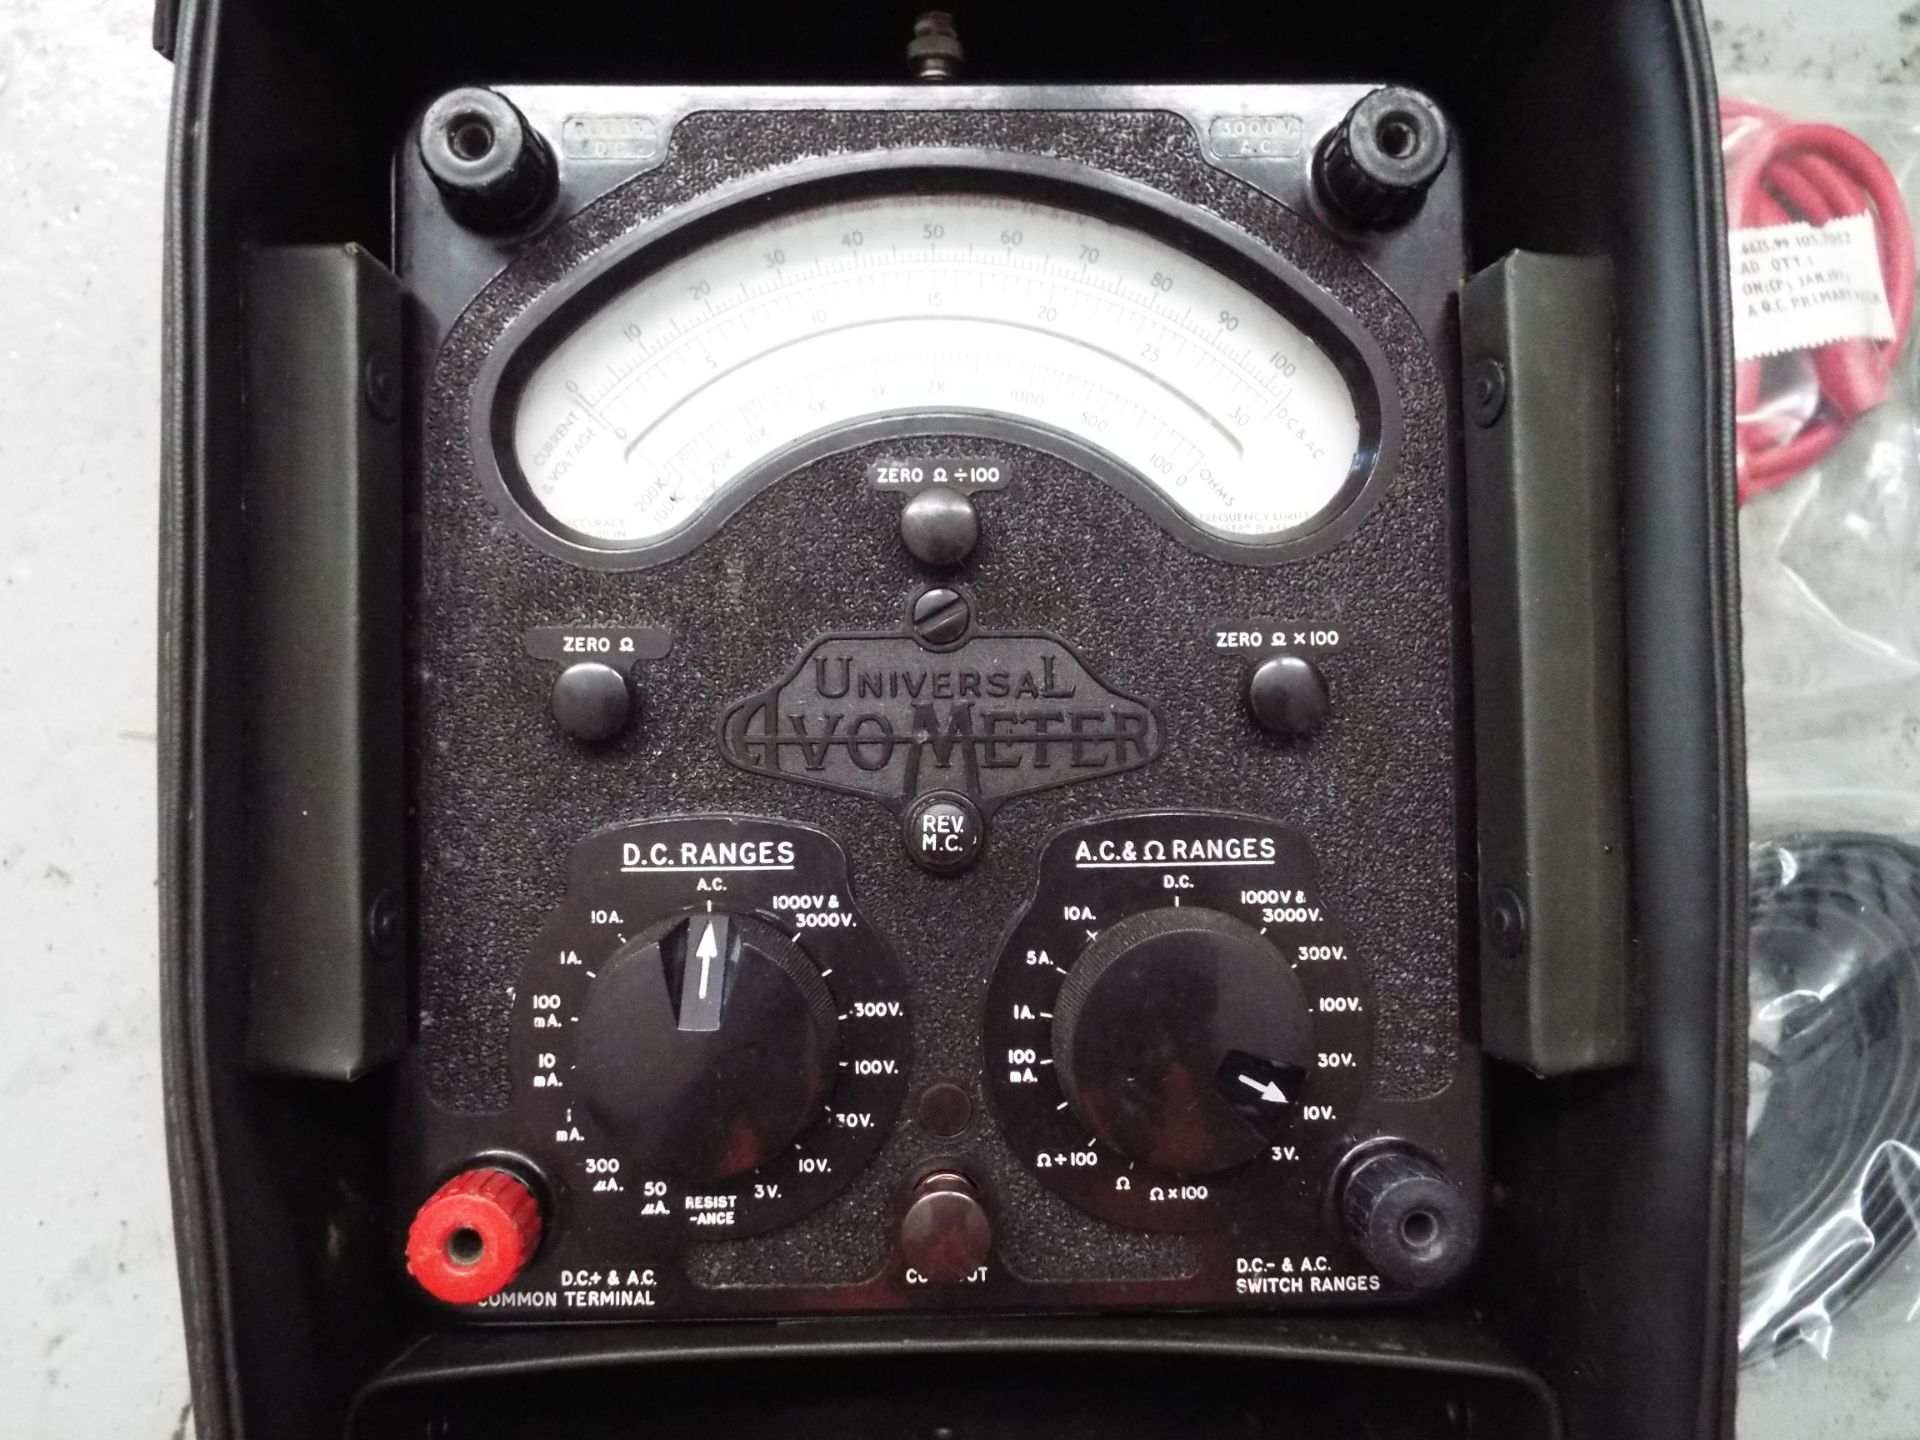 Universal Avometer No.1 Multi Range Test Set - Image 2 of 9